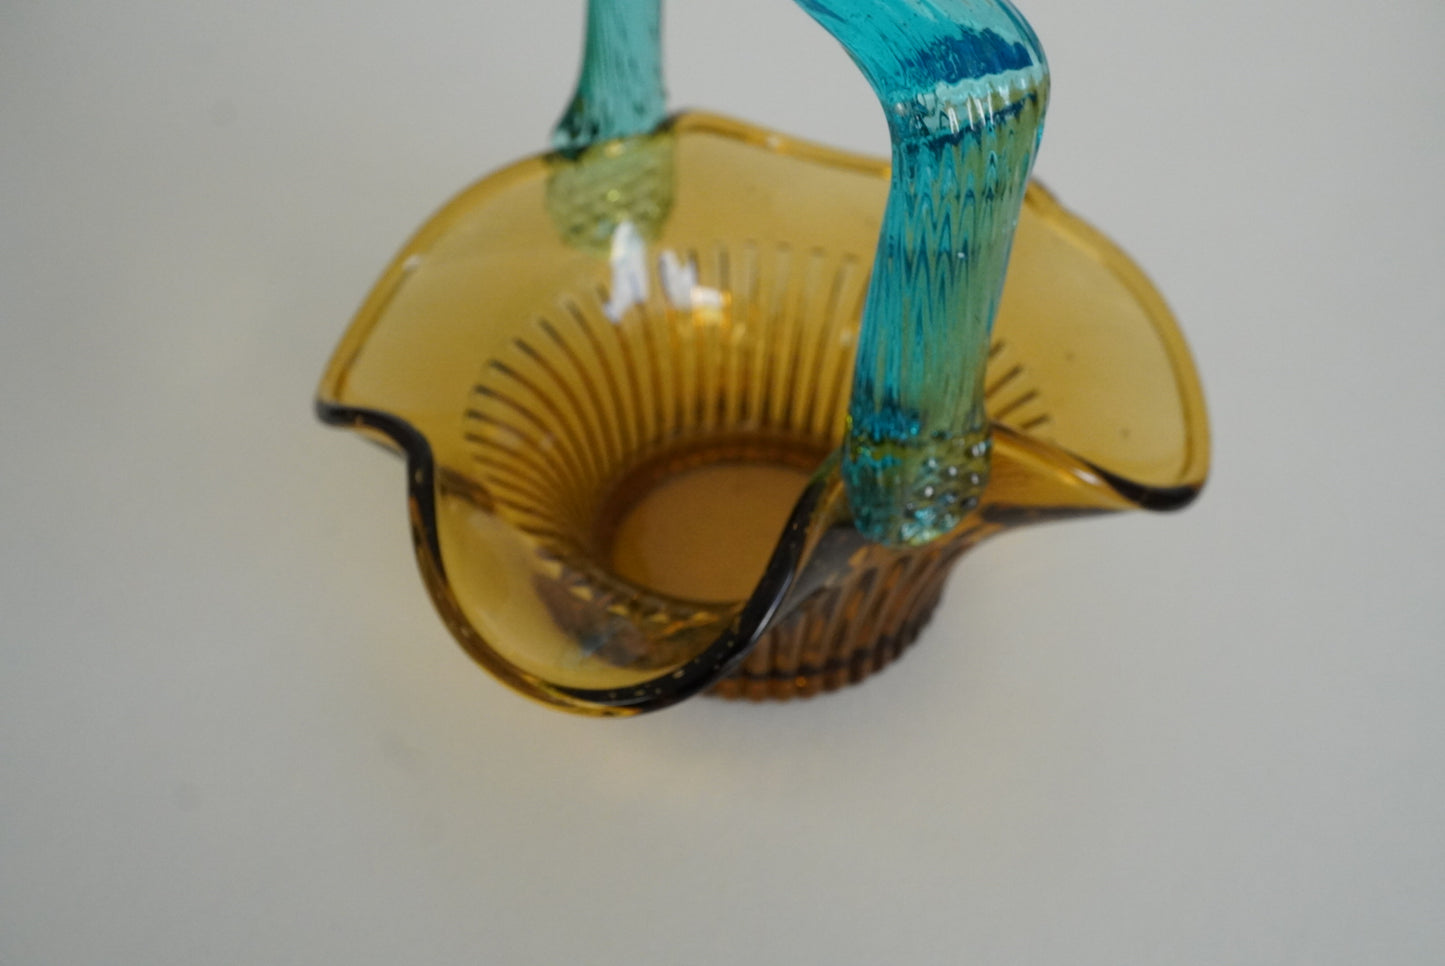 Art Glass Basket